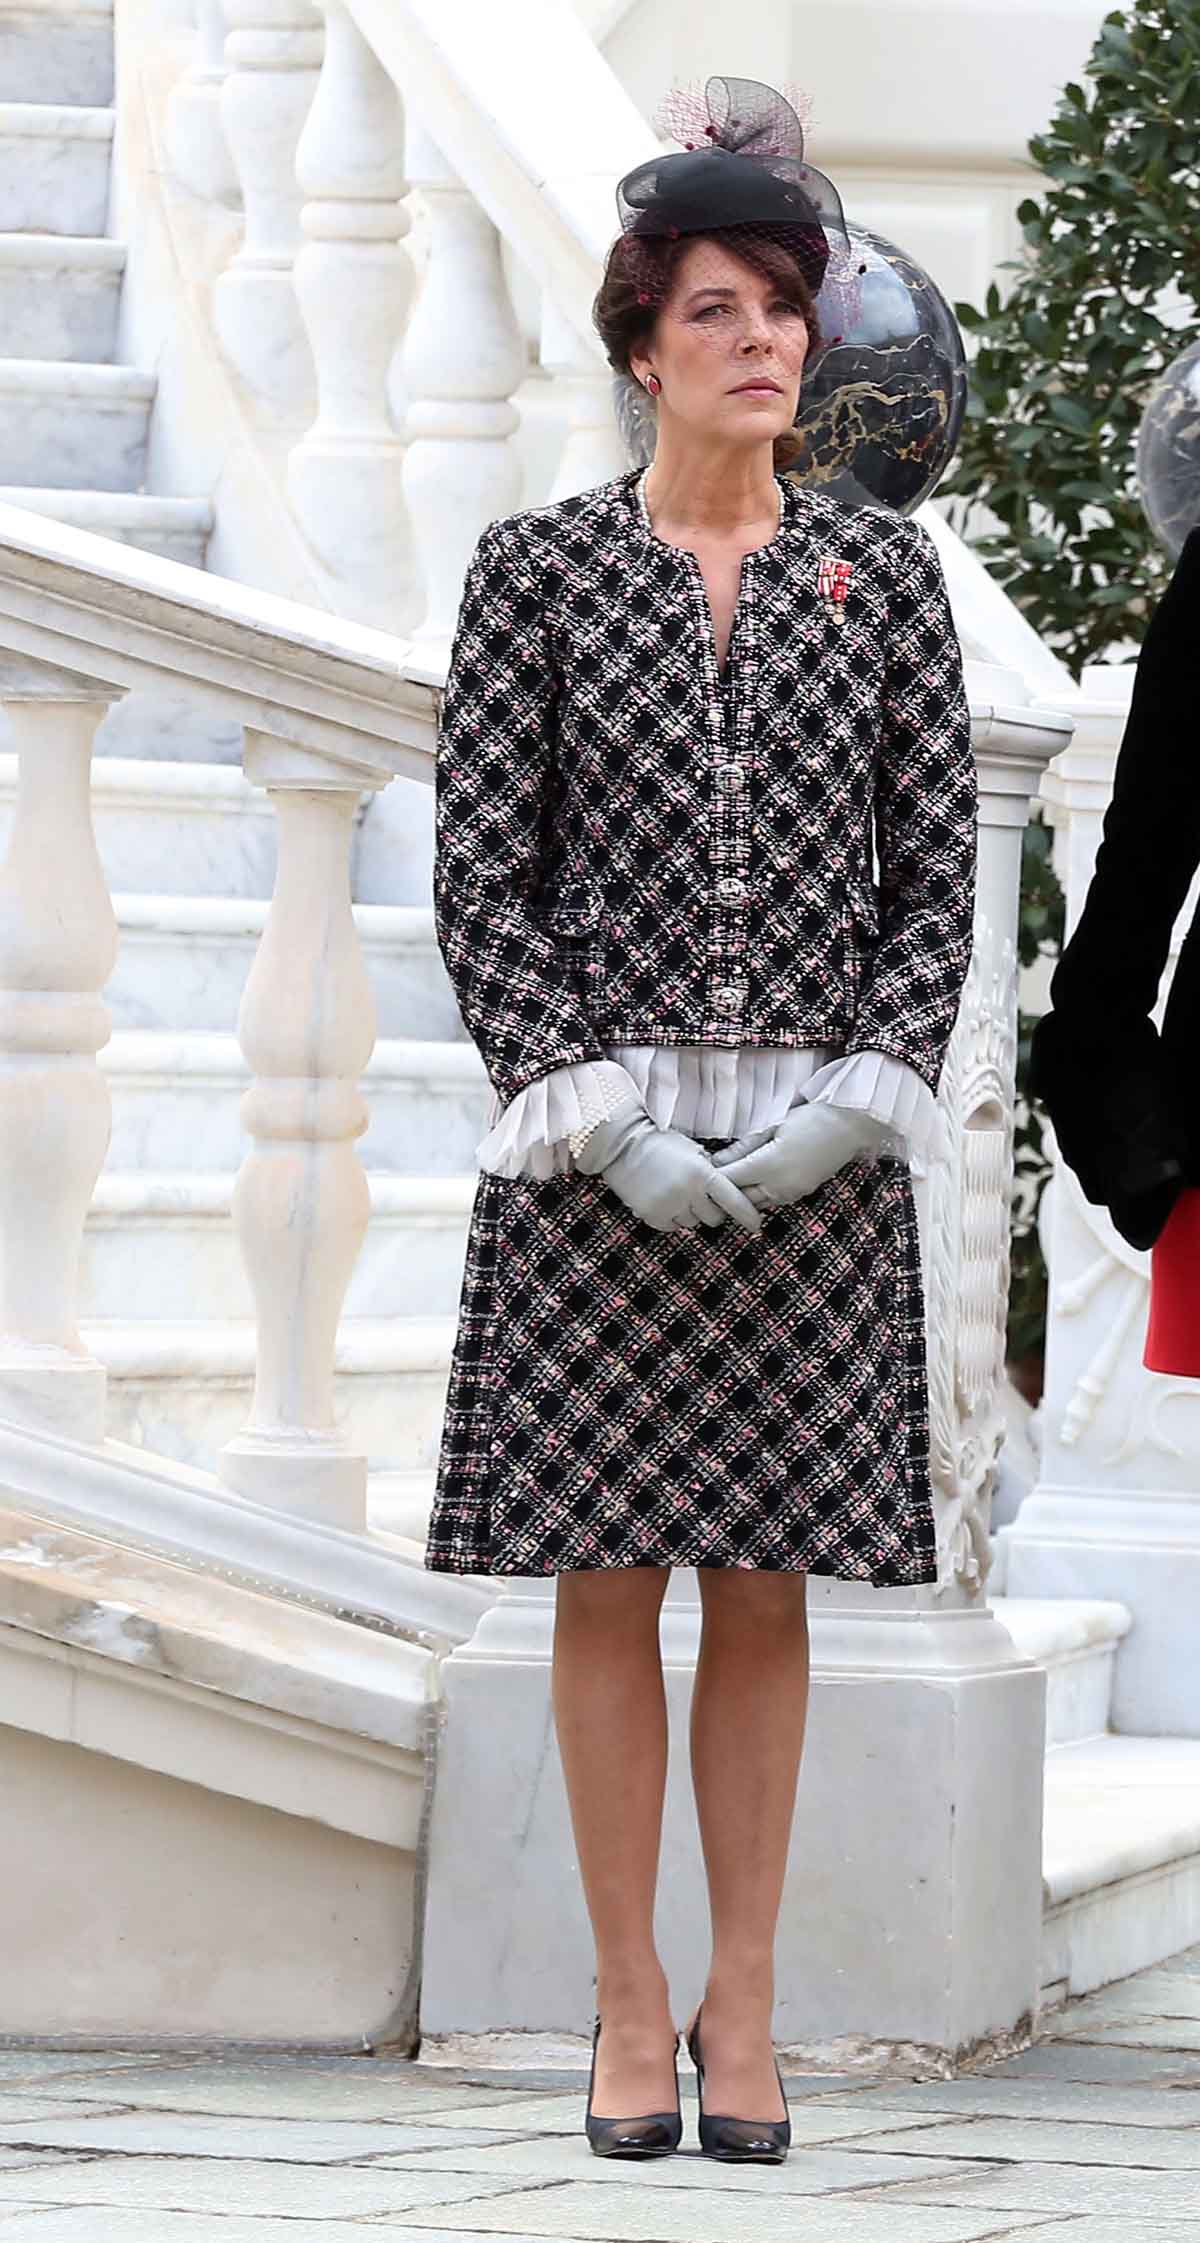 Princes Caroline of Monaco during the celebrations marking Monaco's National Day, Monday, Nov. 19, 2012.